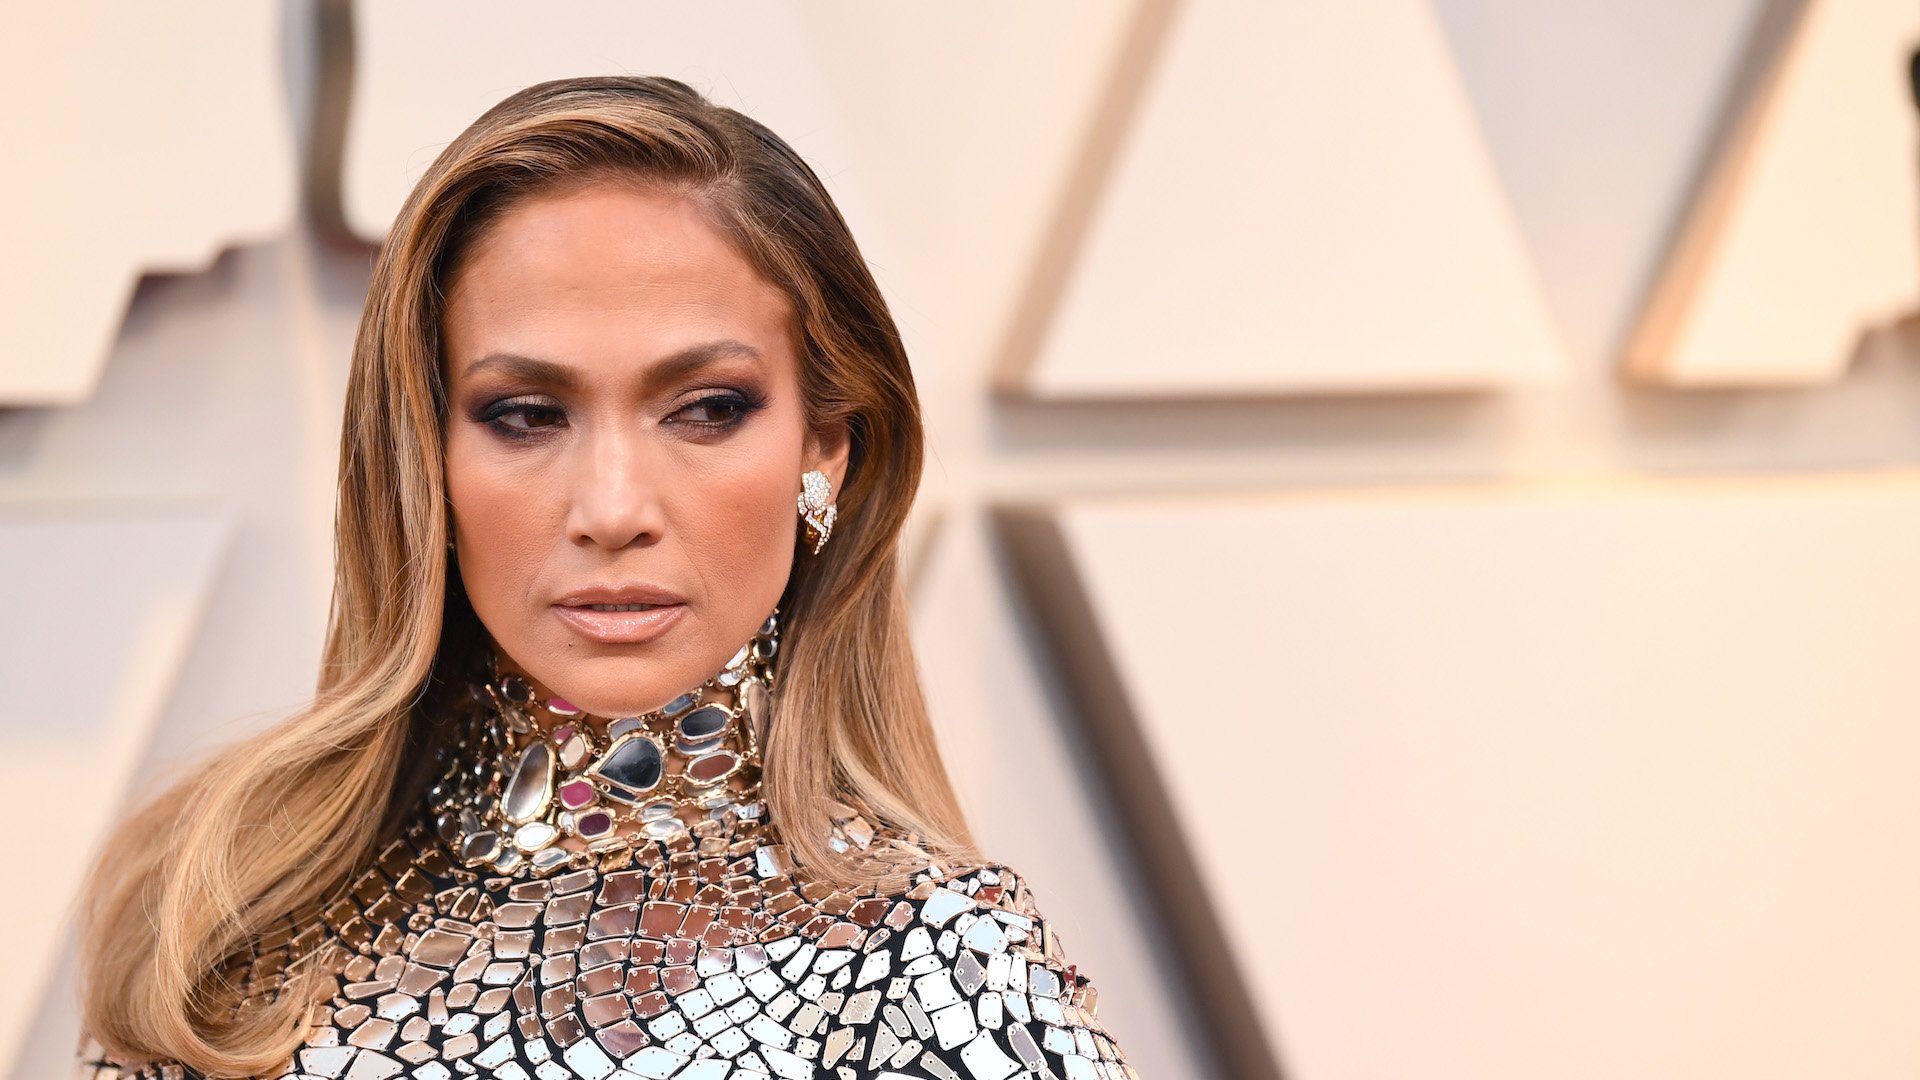 Keep A Youthful Body With Jennifer Lopez’s Nutrition Tips